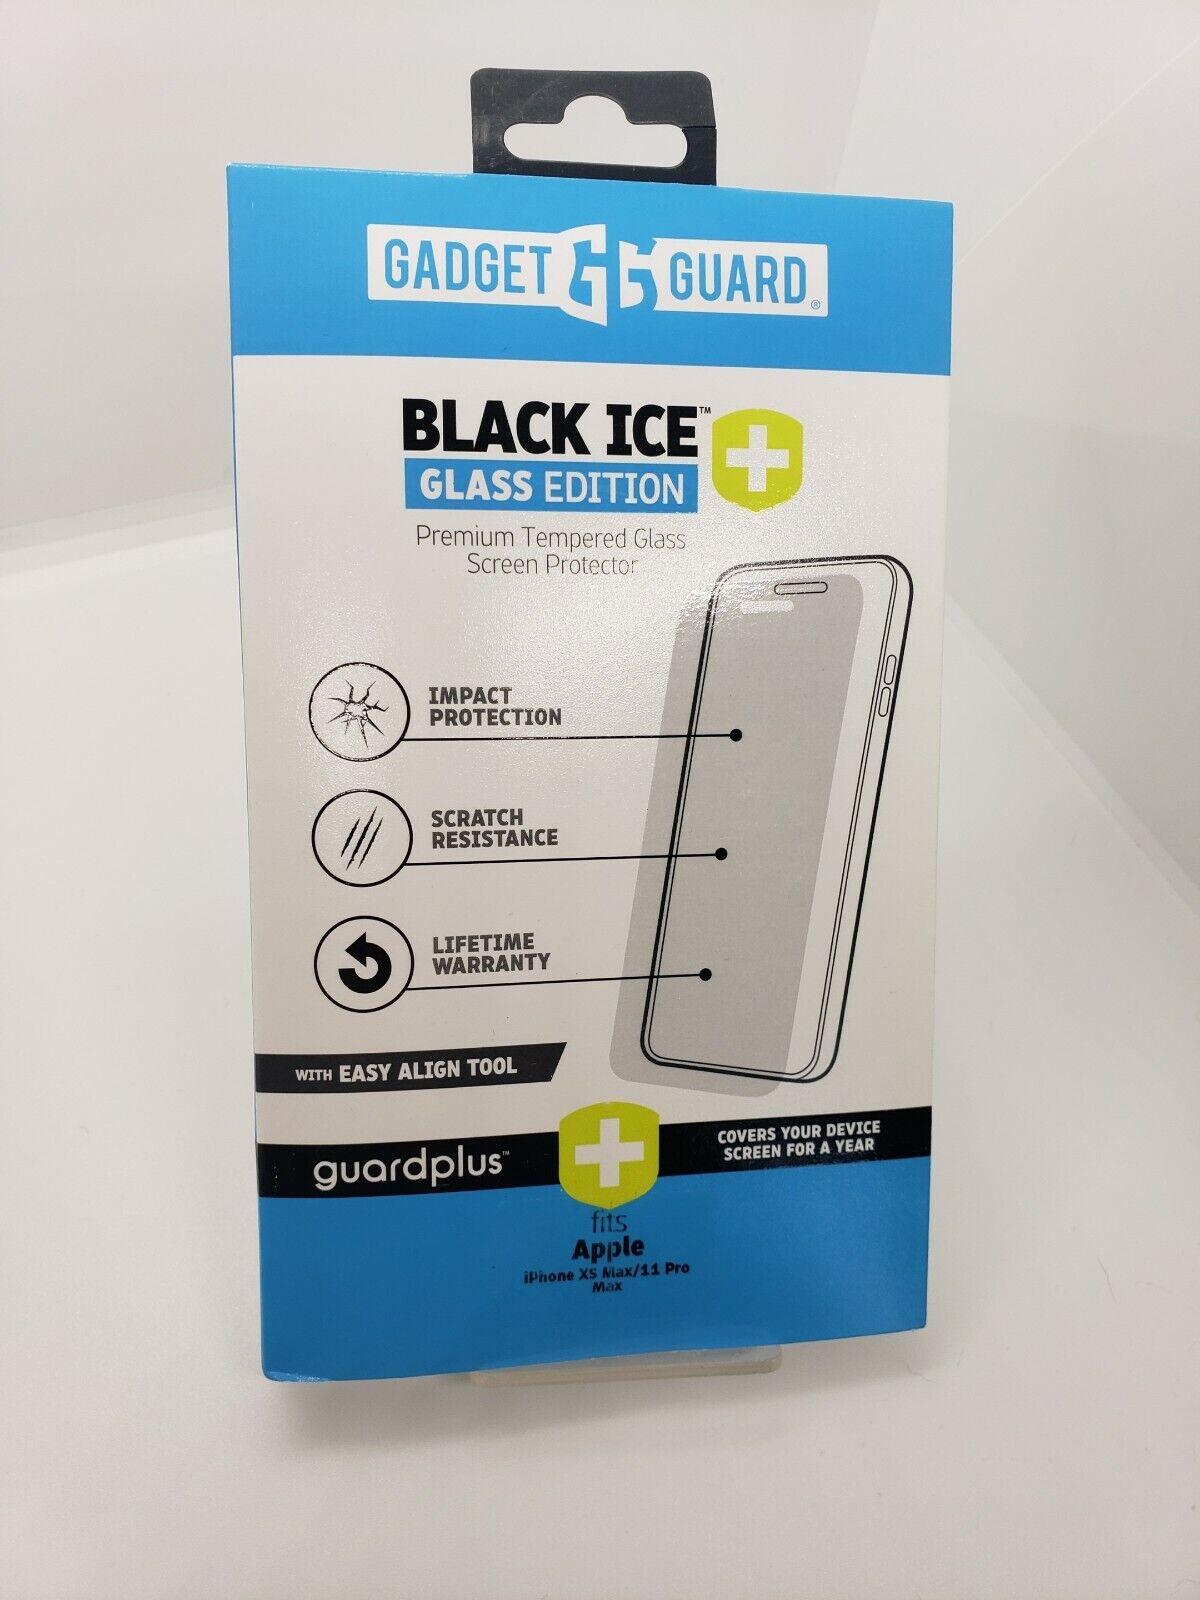 Gadget Guard Black Ice + Edition Screen Protector 5s/SE/6s/7/8/ X/XS 11Pro/Max